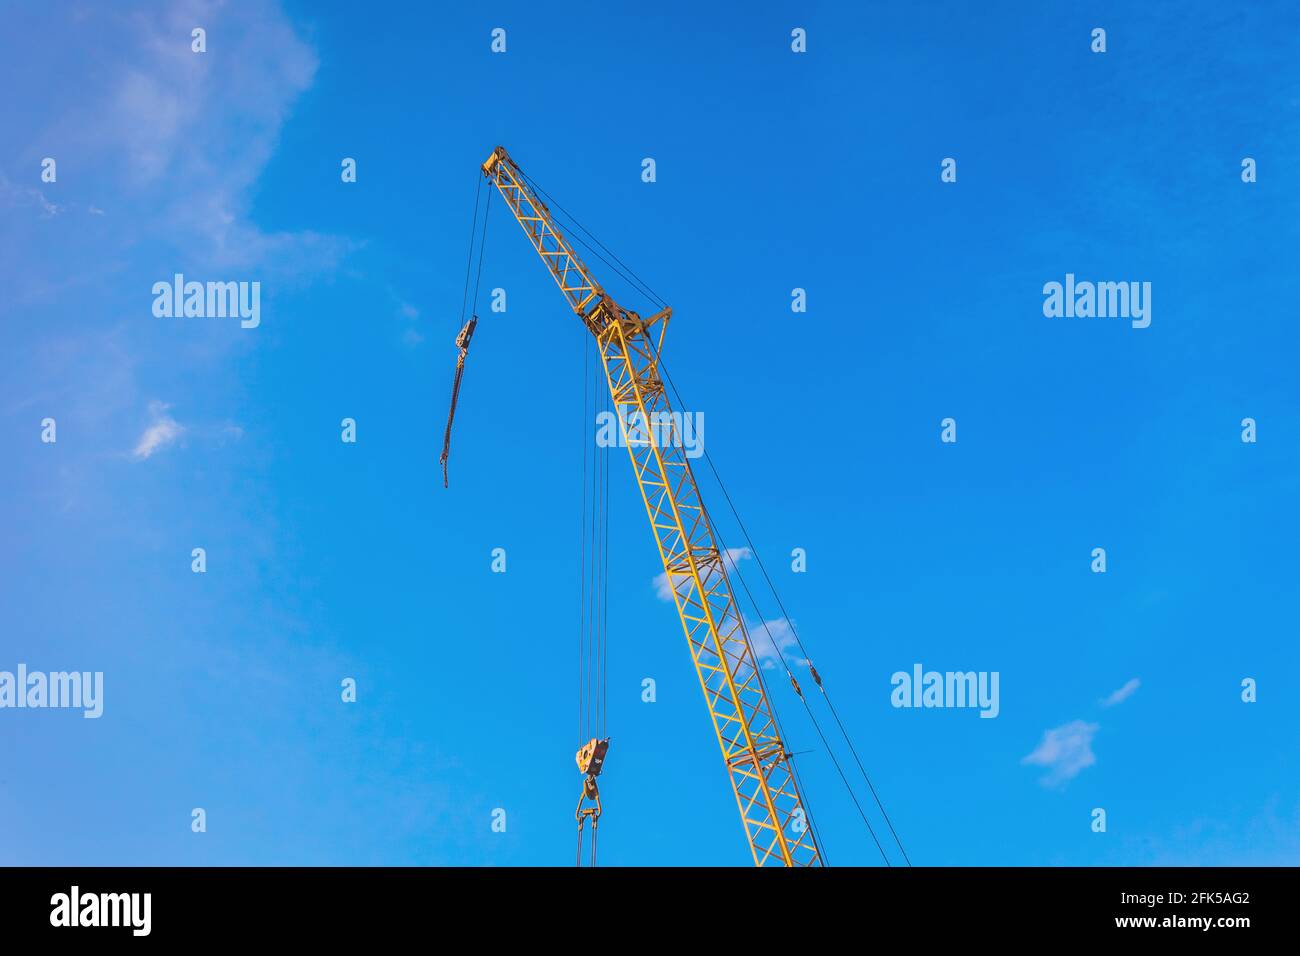 Hoisting machine industrial crane equipment against blue sky at construction site. Stock Photo